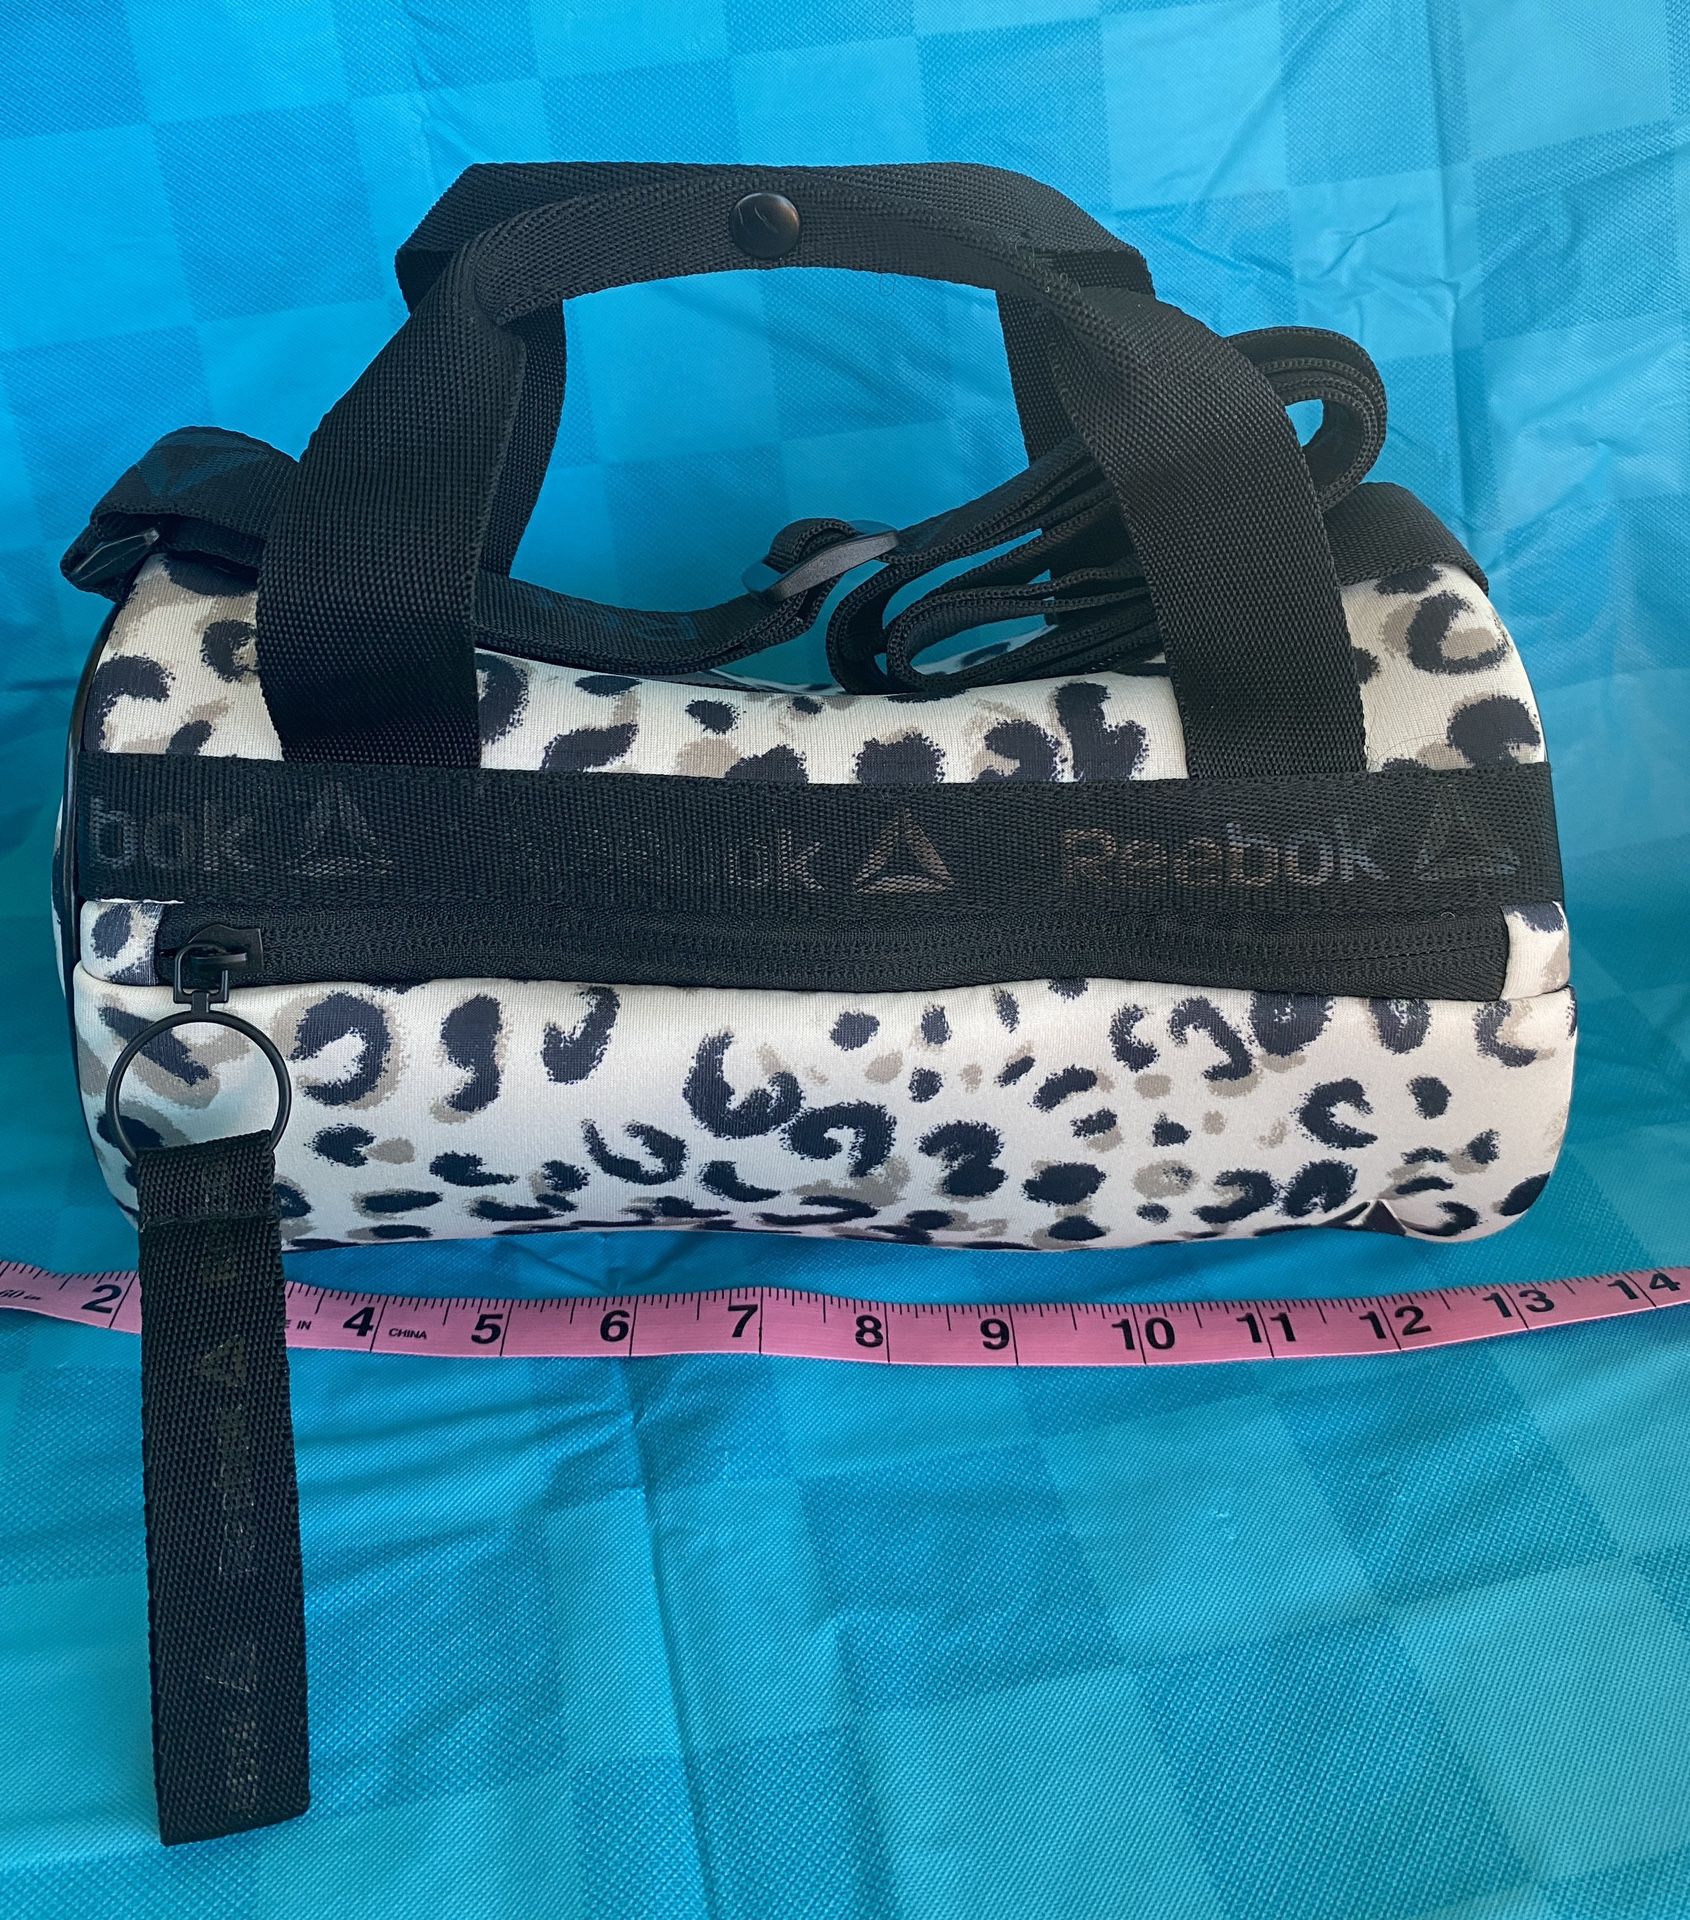 Reebok Women's Victoria Womens Duffel Handbag Leopard